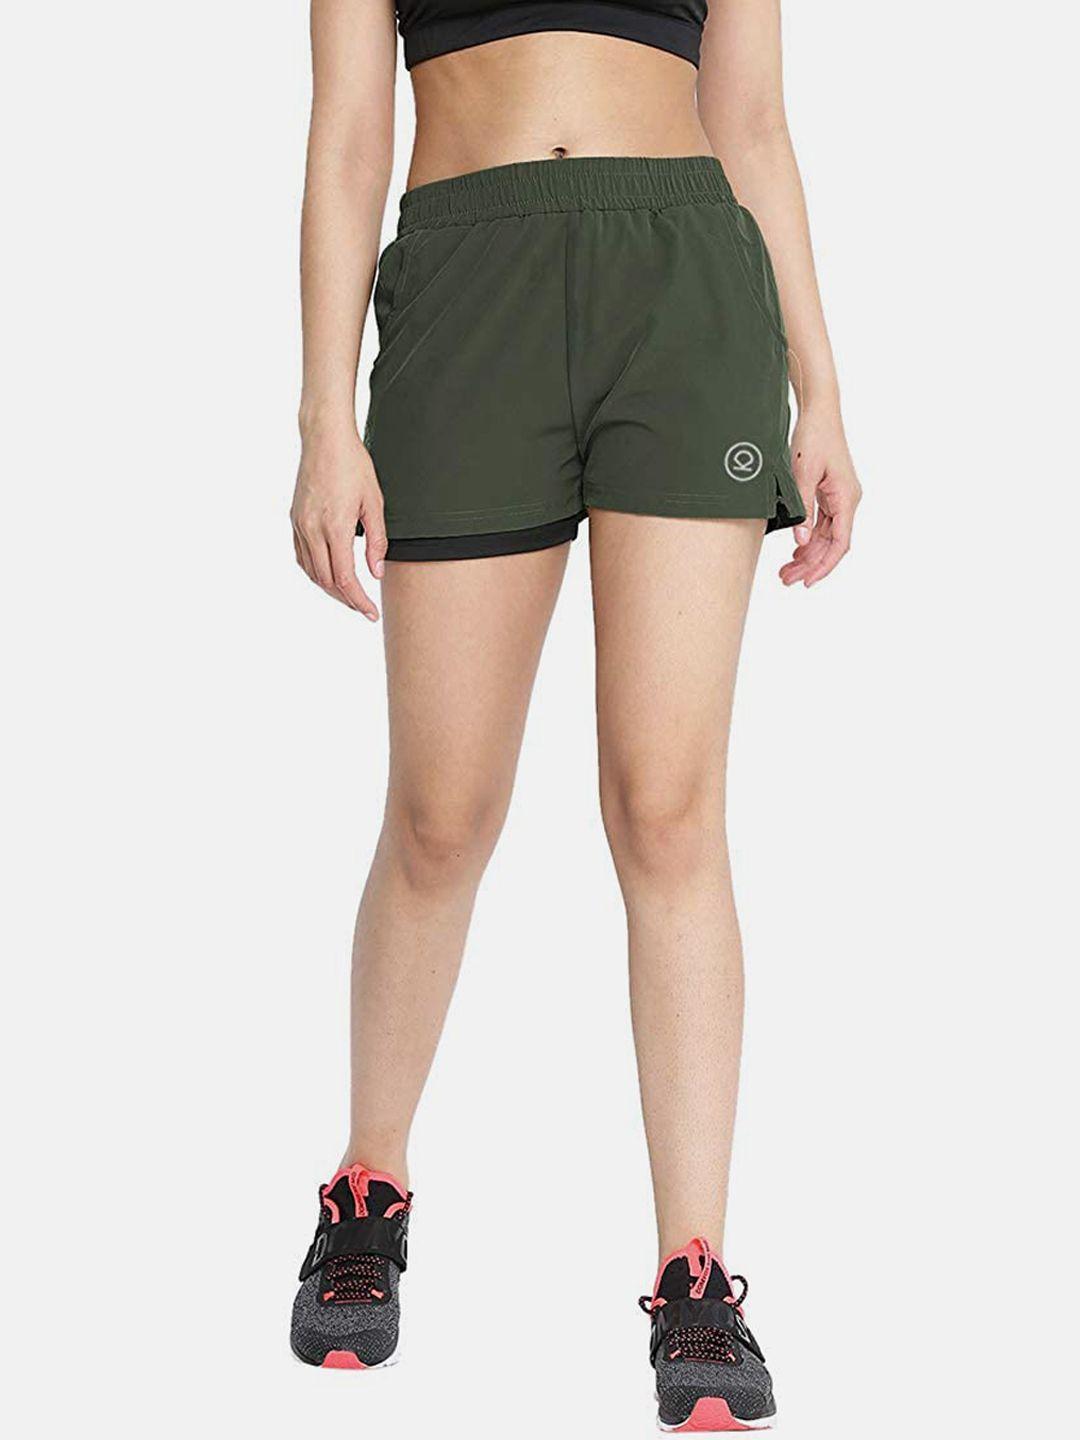 chkokko women olive green running sports shorts